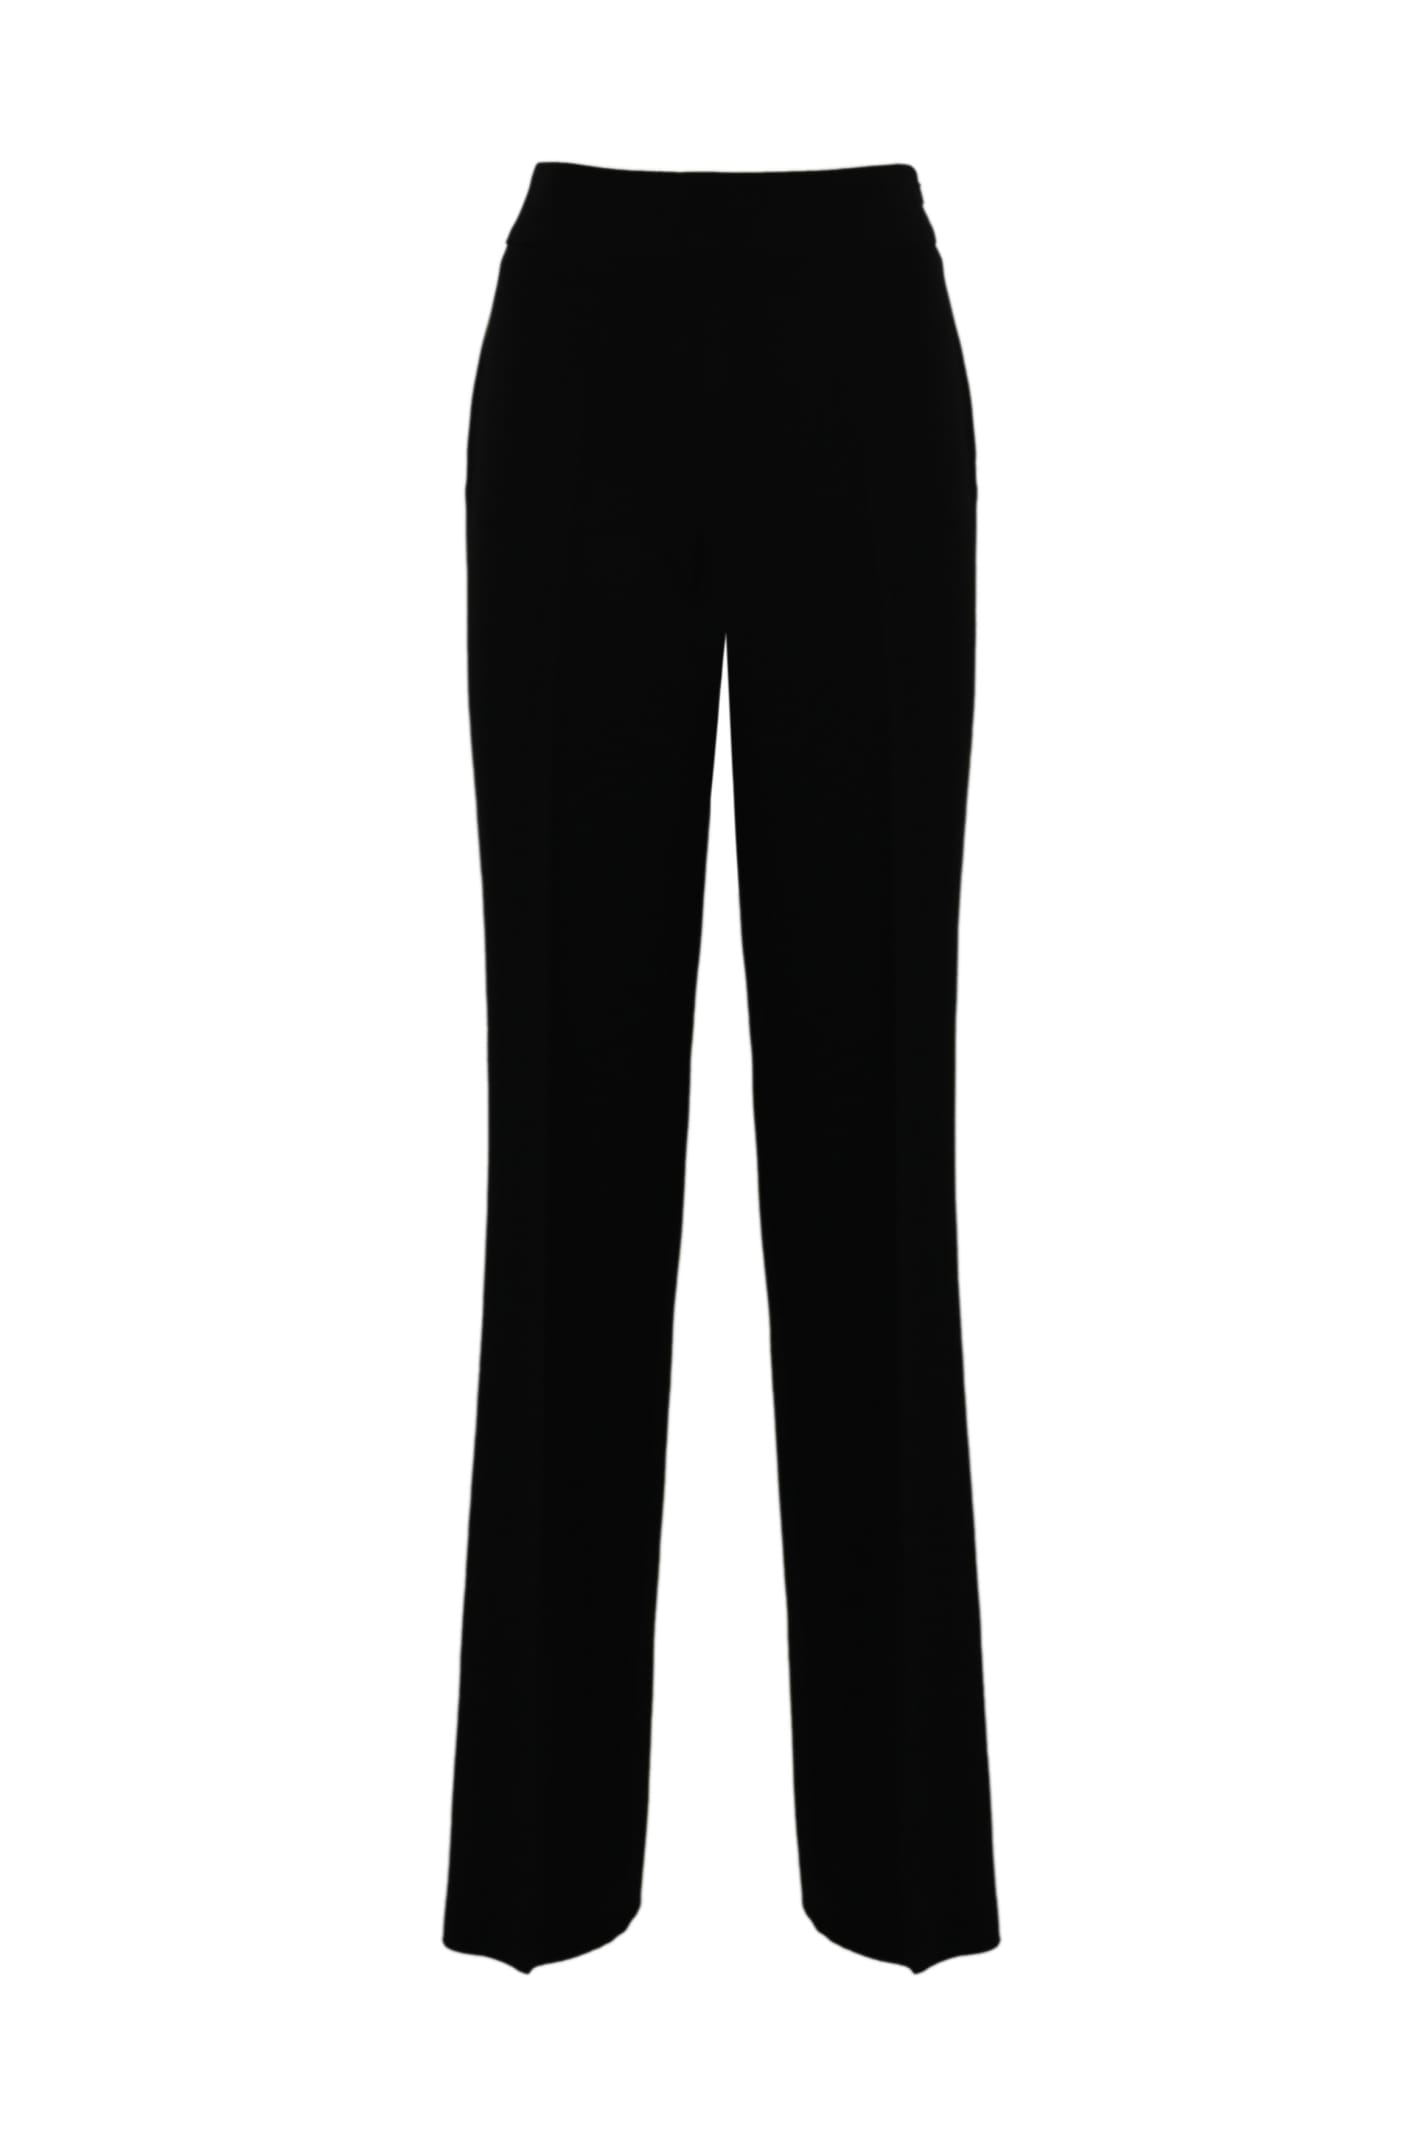 Max Mara asymmetric pants - ShopStyle